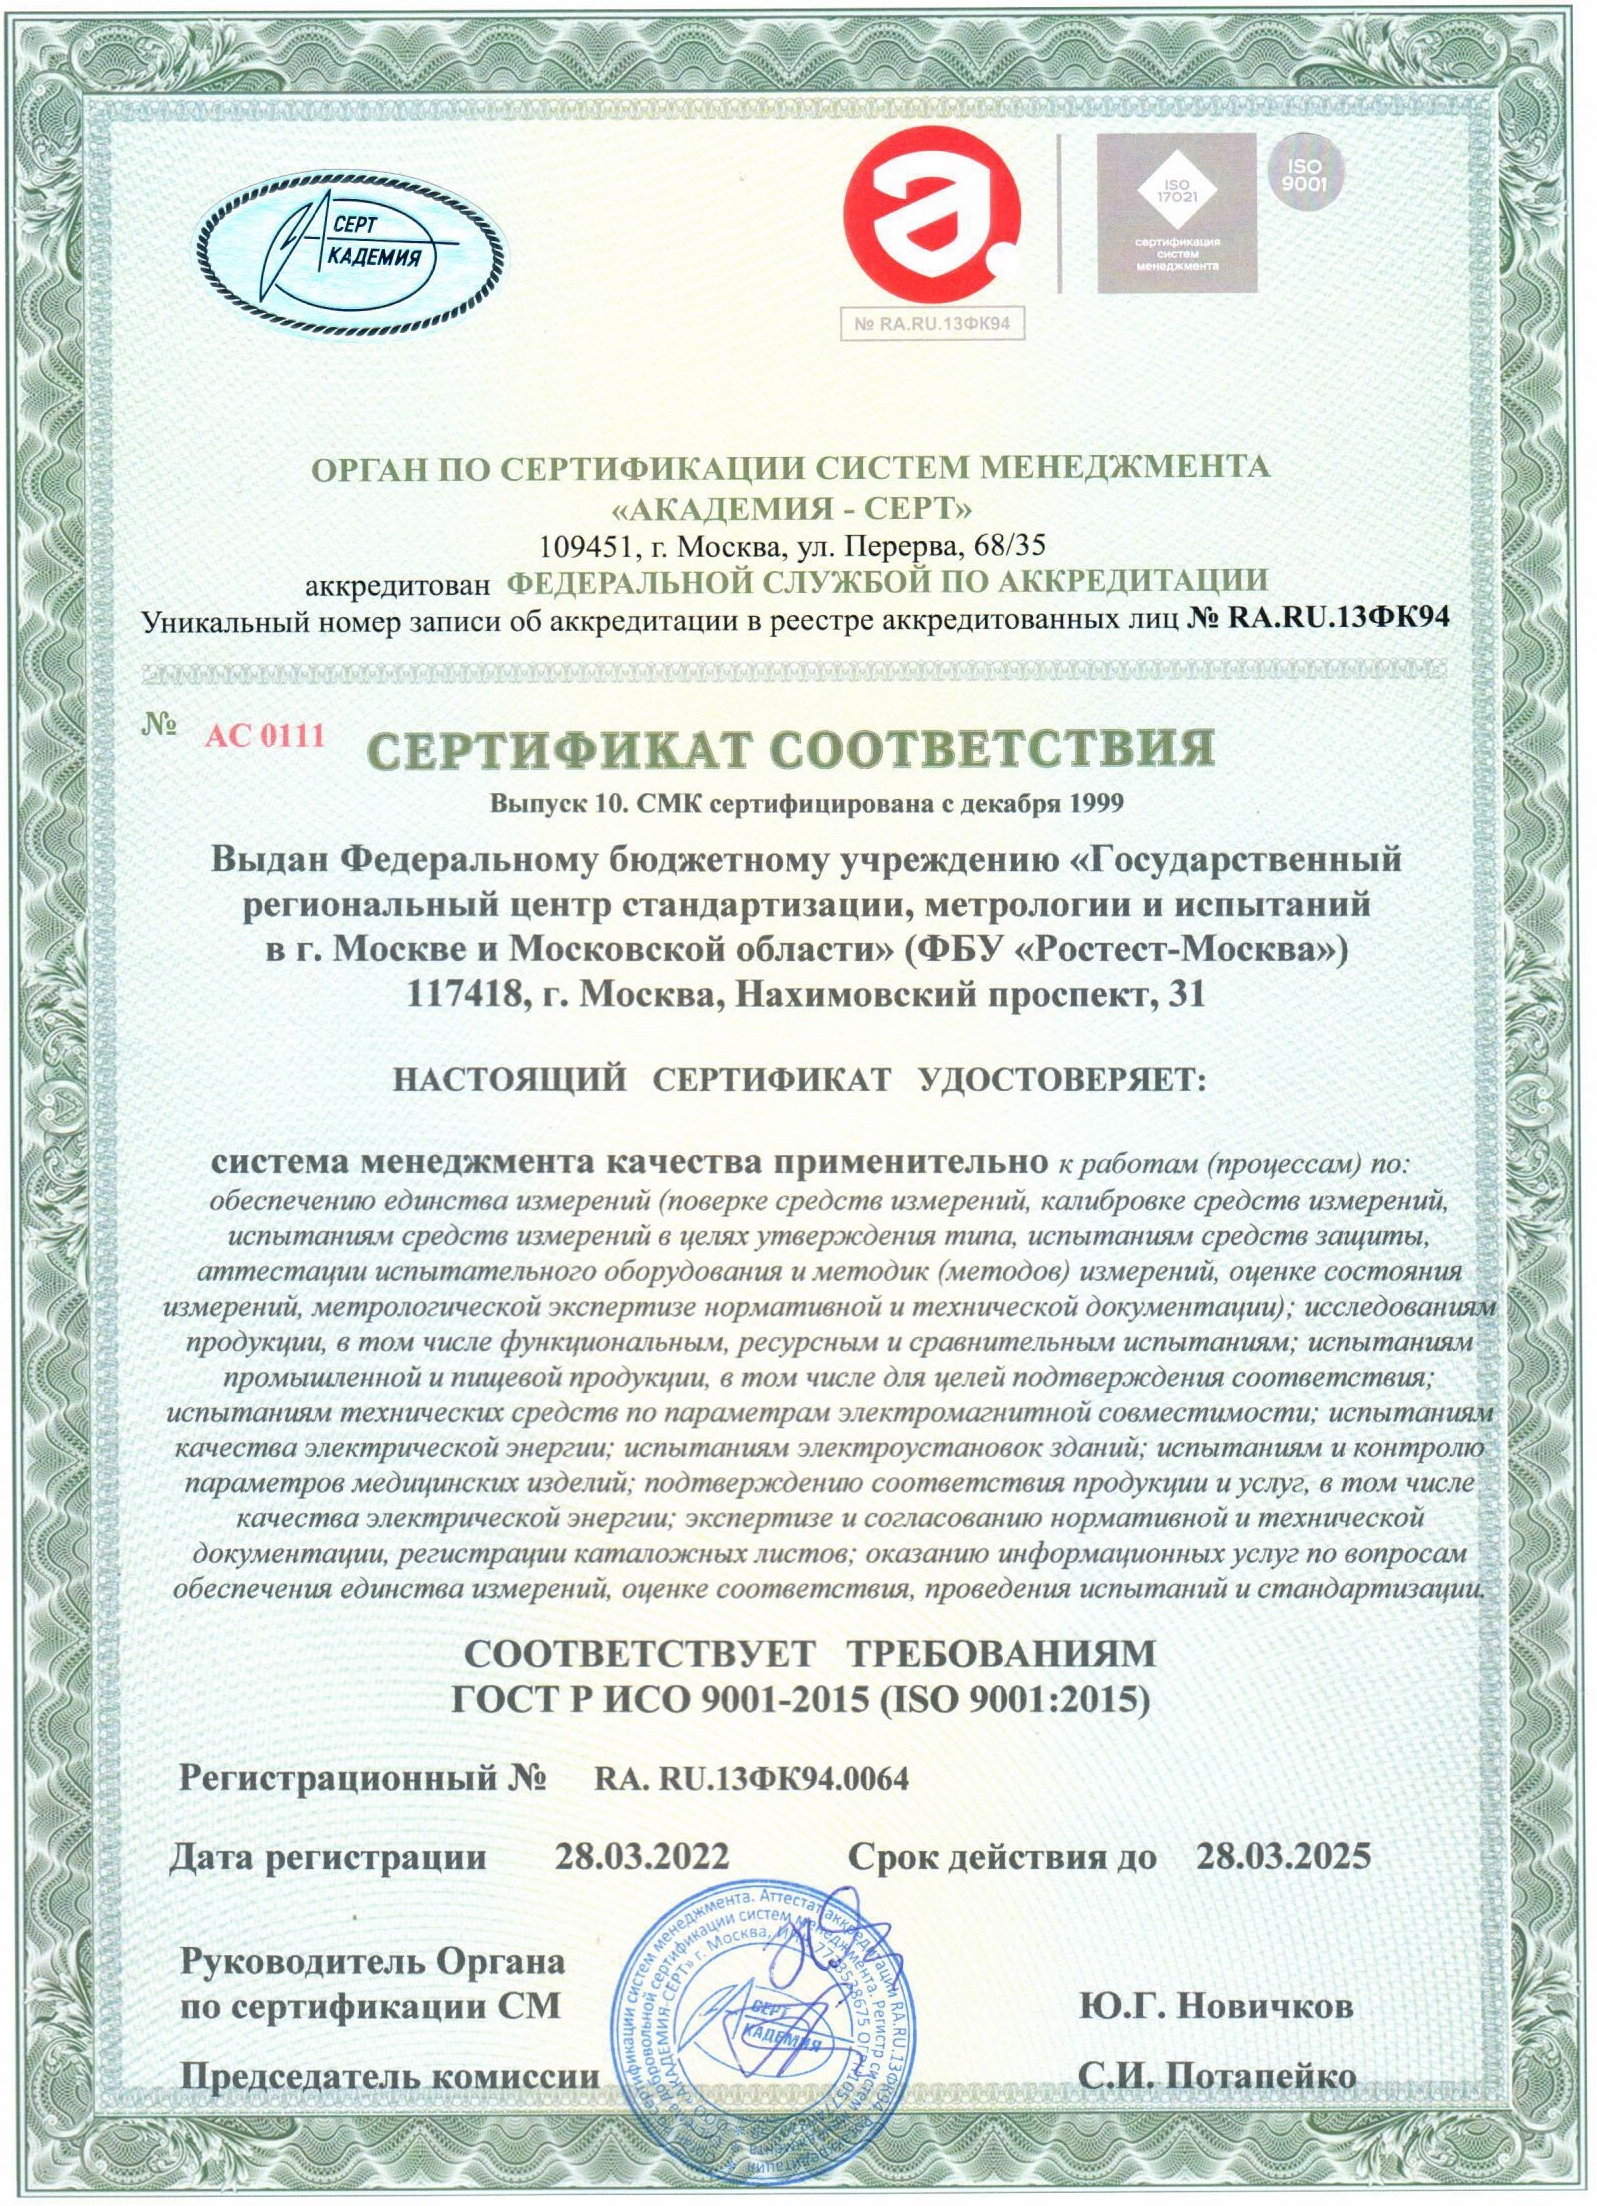 Сертификат соответствия №RA.RU.13ФК94.0064 от 28.03.2022 на соответствие требованиям ГОСТ Р ИСО 9001-2015 (ISO 9001:2015)